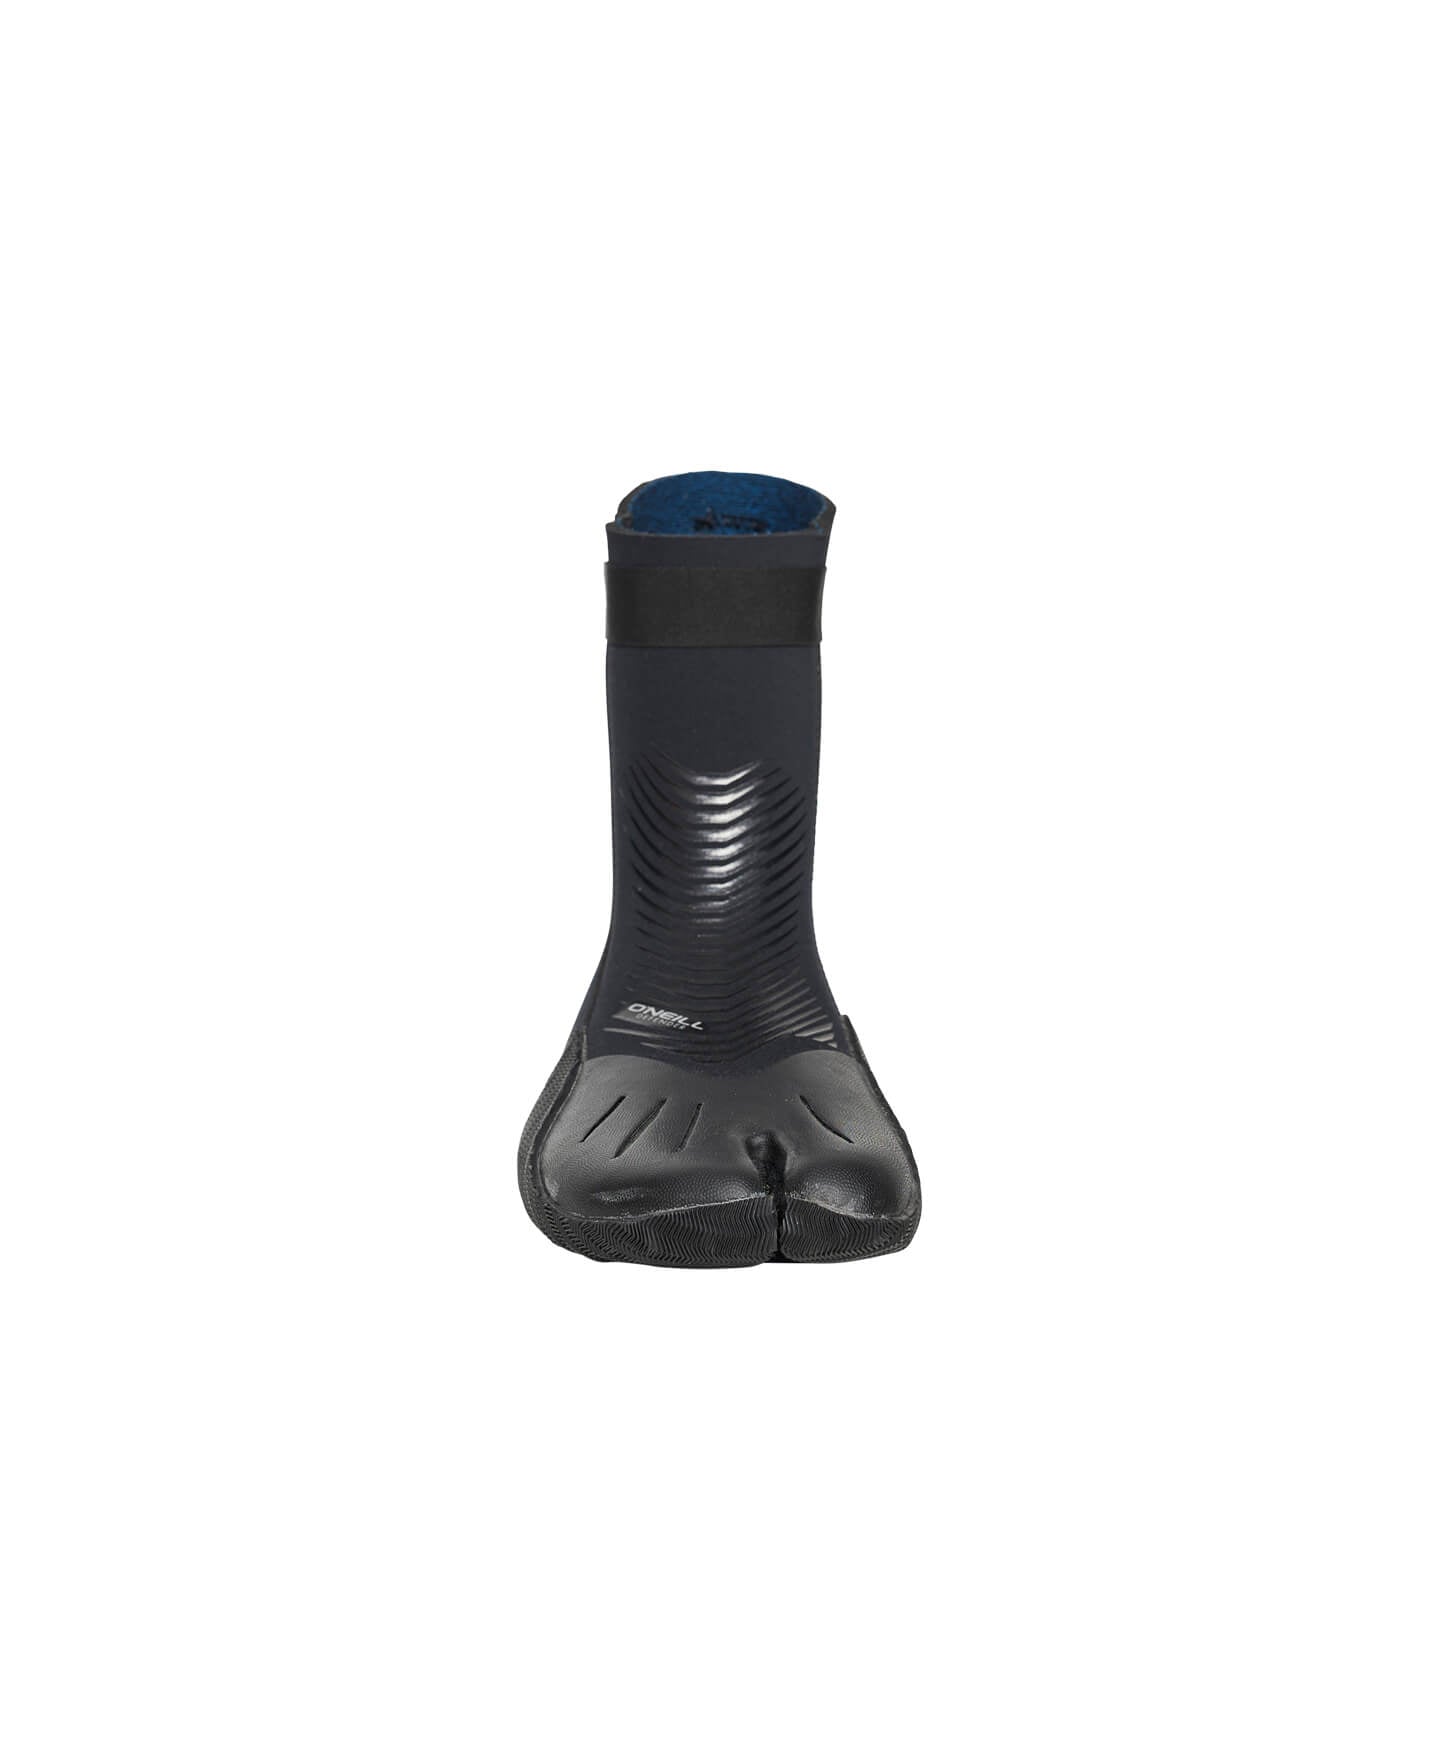 Defender Split Toe 3mm Wetsuit Boot - Black